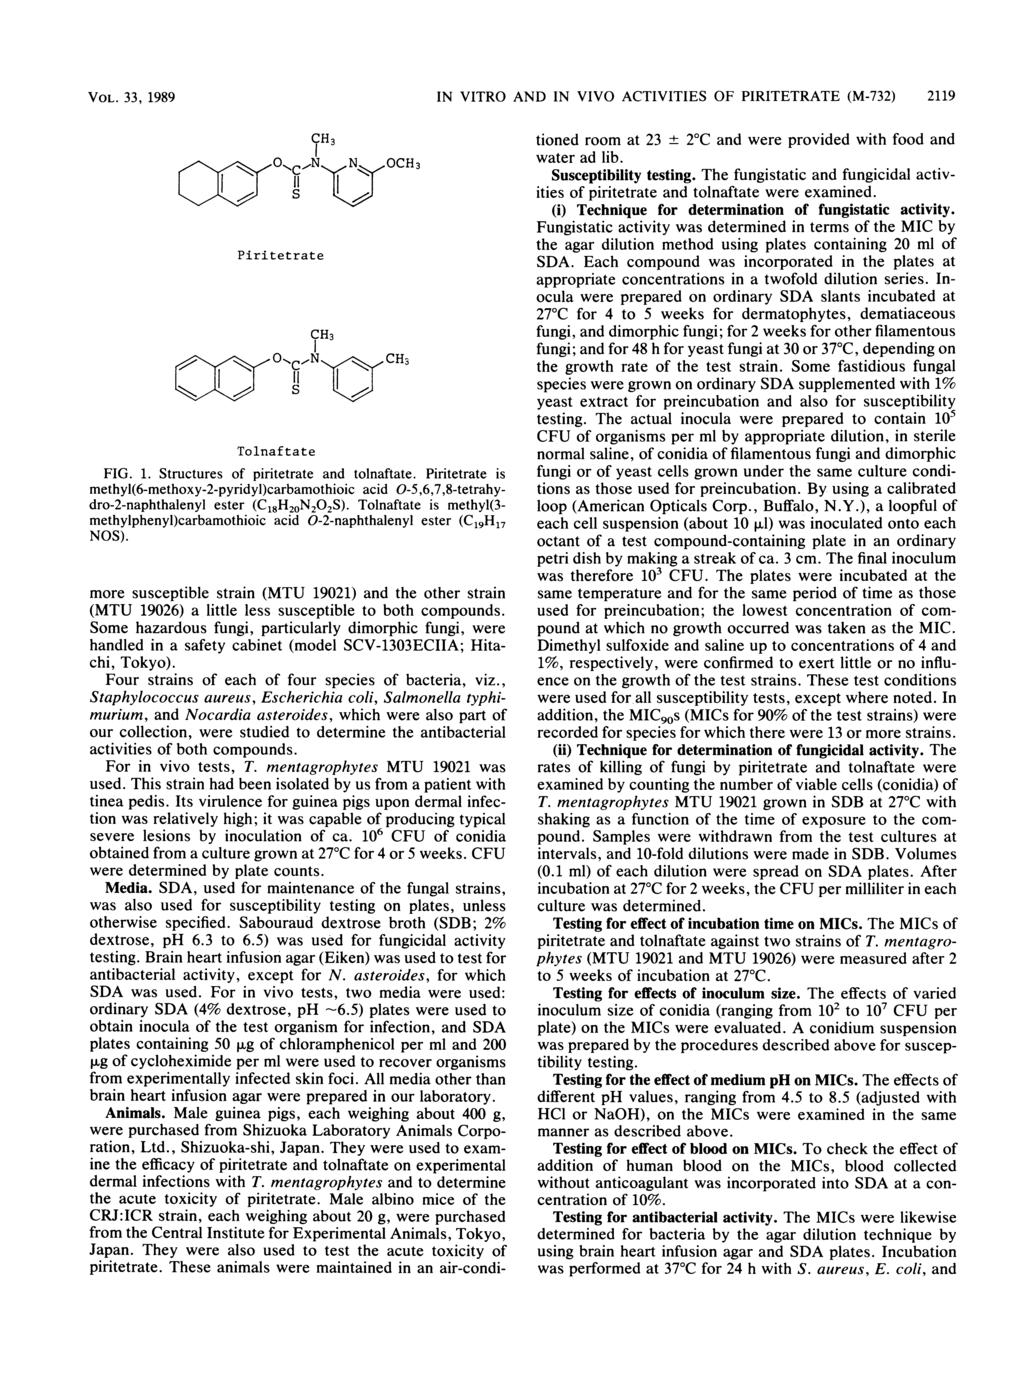 VOL. 33, 1989 IN VITRO AND IN VIVO ACTIVITIES OF PIRITETRATE (M-732) 2119 C DzO 0-C - II CH3 Piritetrate CH3 N OCH3, OC,N CH3 Tolnaftate FIG. 1. Structures of piritetrate and tolnaftate.